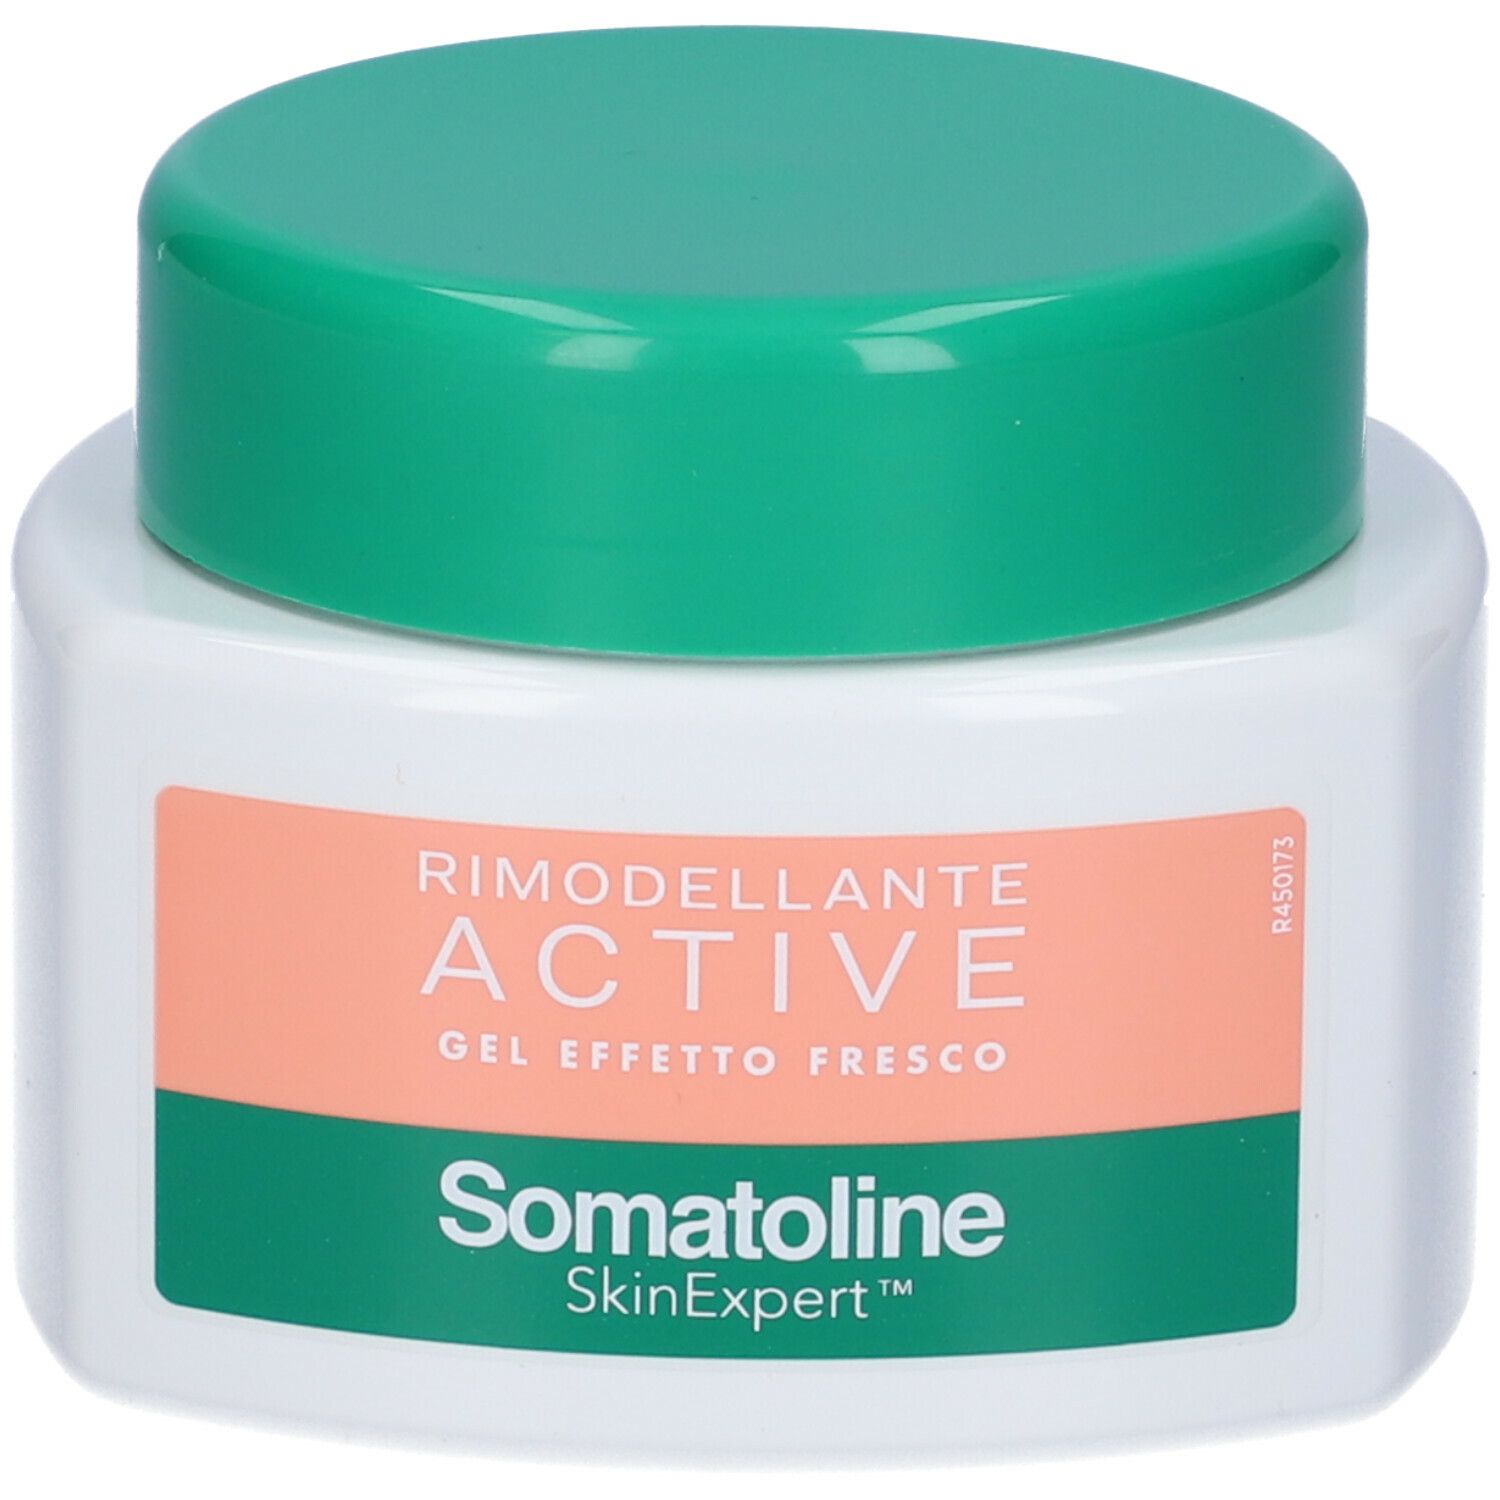 Somatoline SkinExpert™ Gel Rimodellante Active